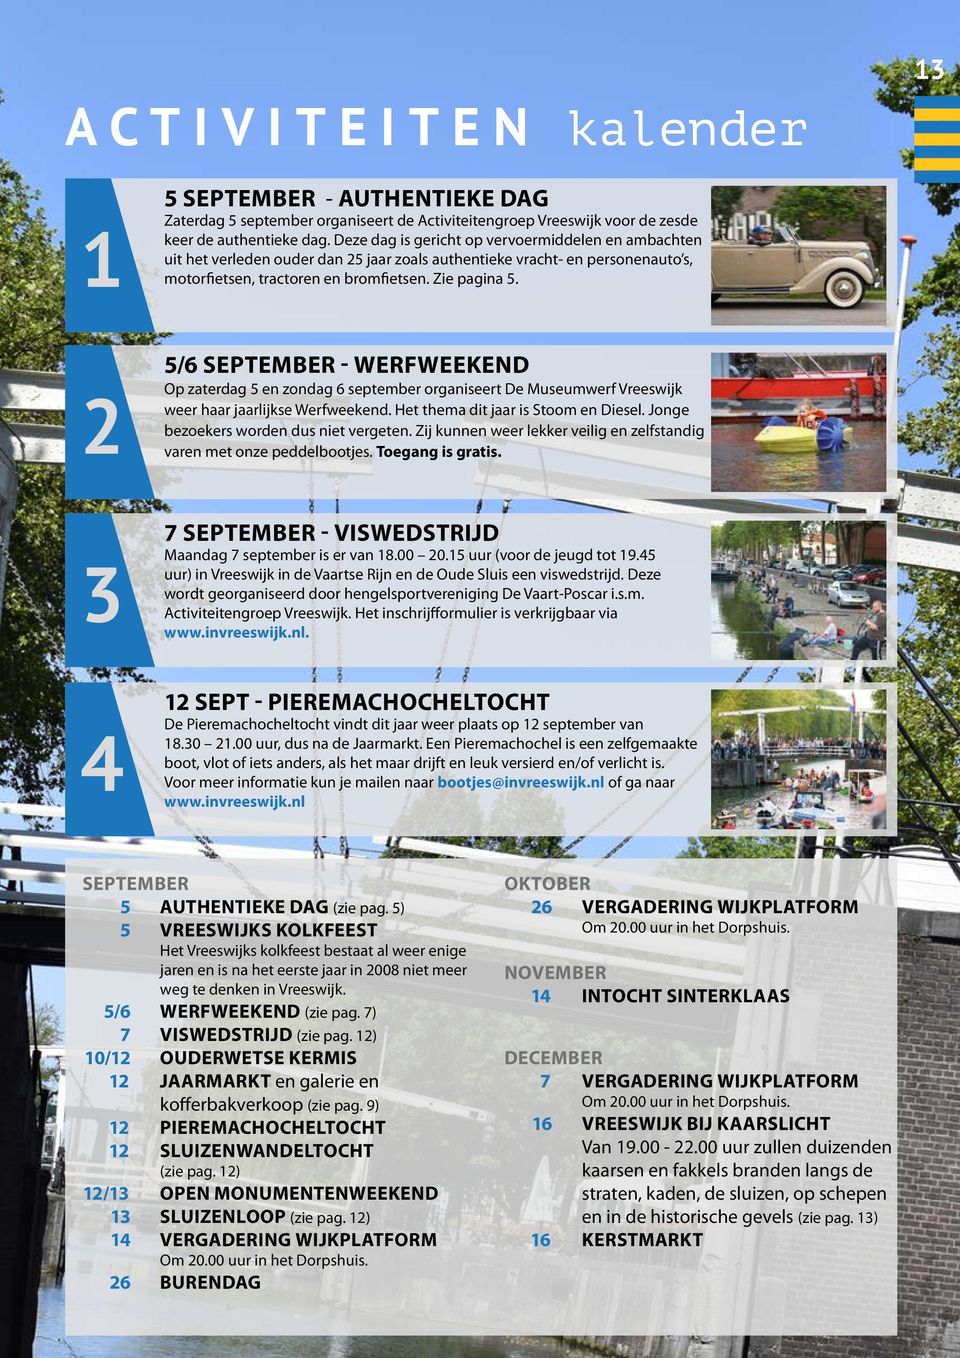 5/6 SEPTEMBER - WERFWEEKEND Op zaterdag 5 en zondag 6 september organiseert De Museumwerf Vreeswijk weer haar jaarlijkse Werfweekend. Het thema dit jaar is Stoom en Diesel.